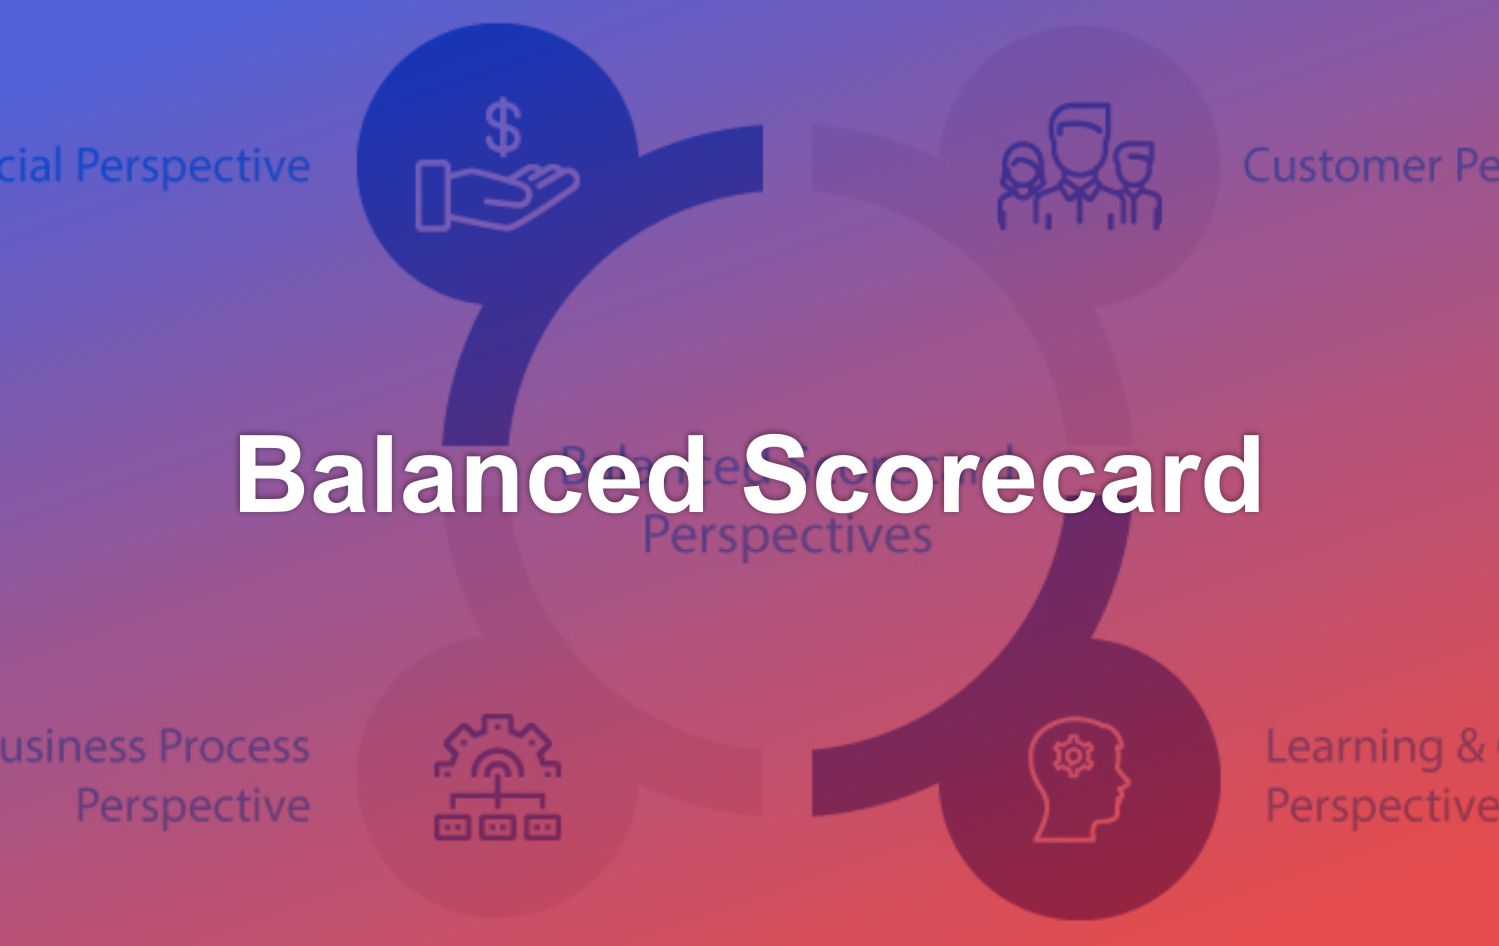 What is Balanced Scorecard?